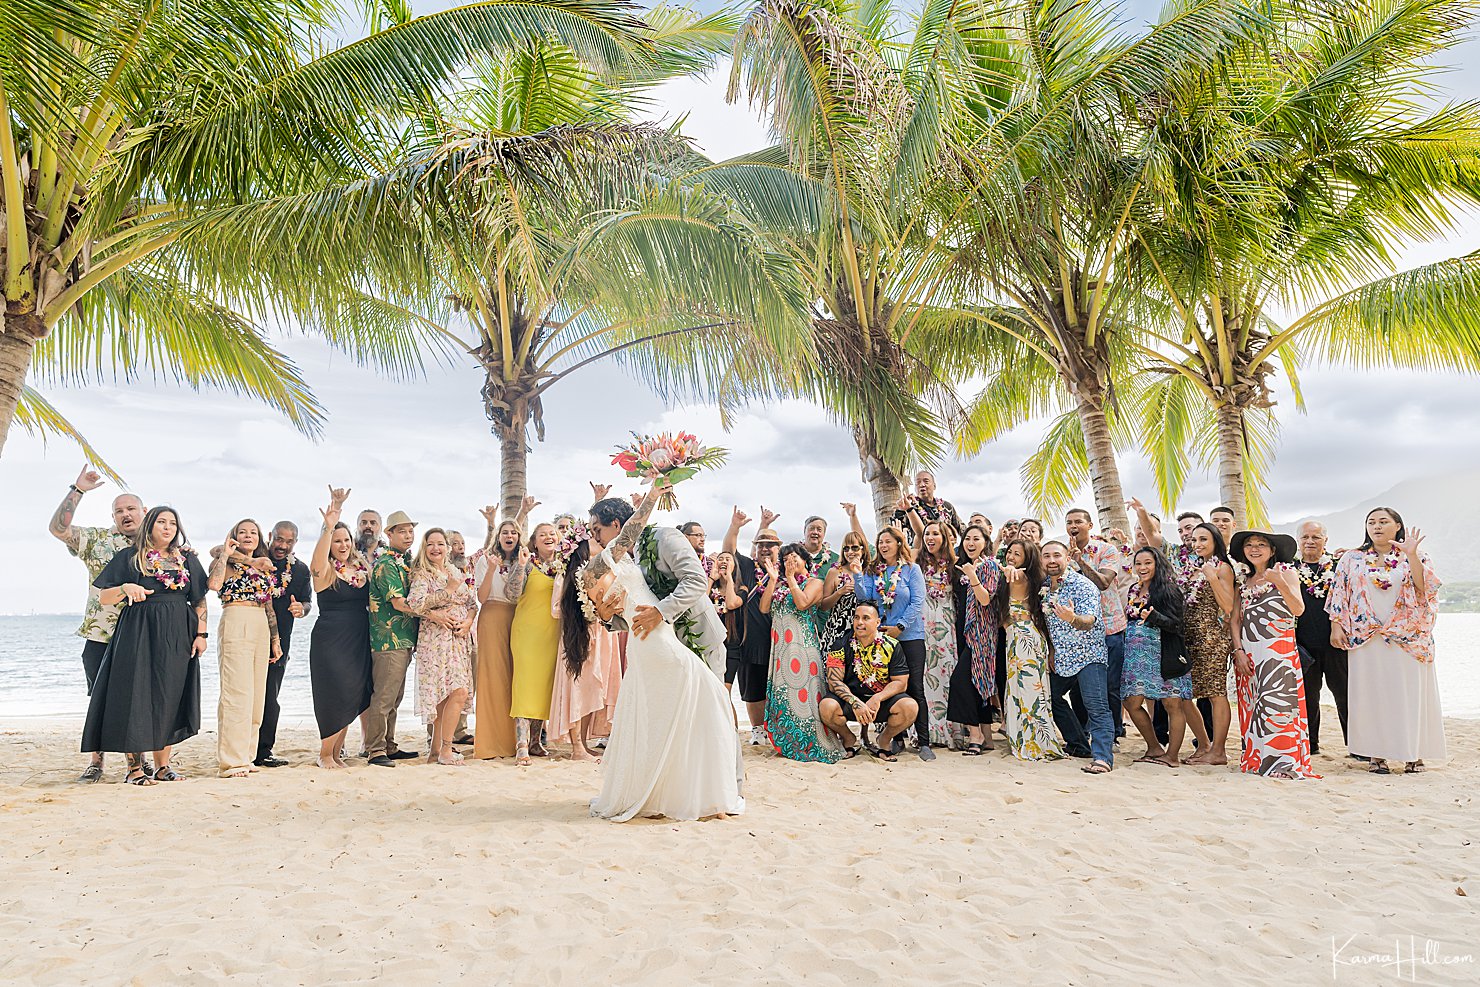 Hawaii Is Our Home - Ava & Dawson's Venue Wedding in Oahu